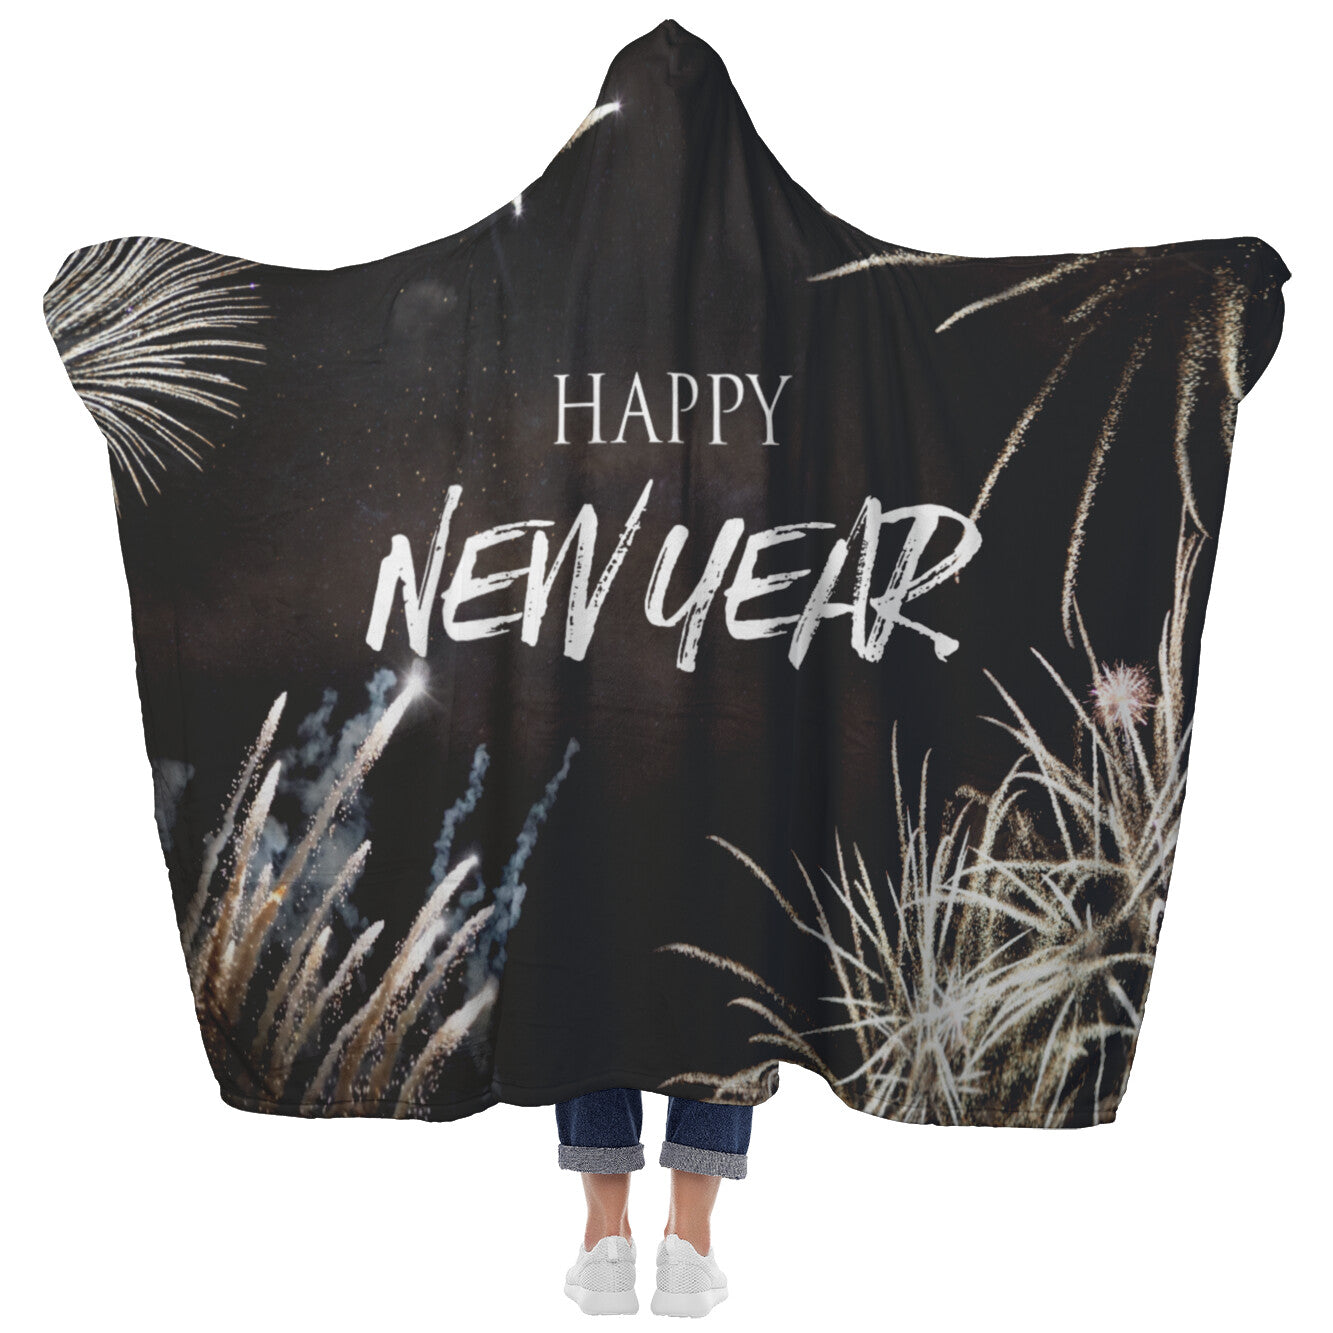 Happy New Year Hooded Blanket